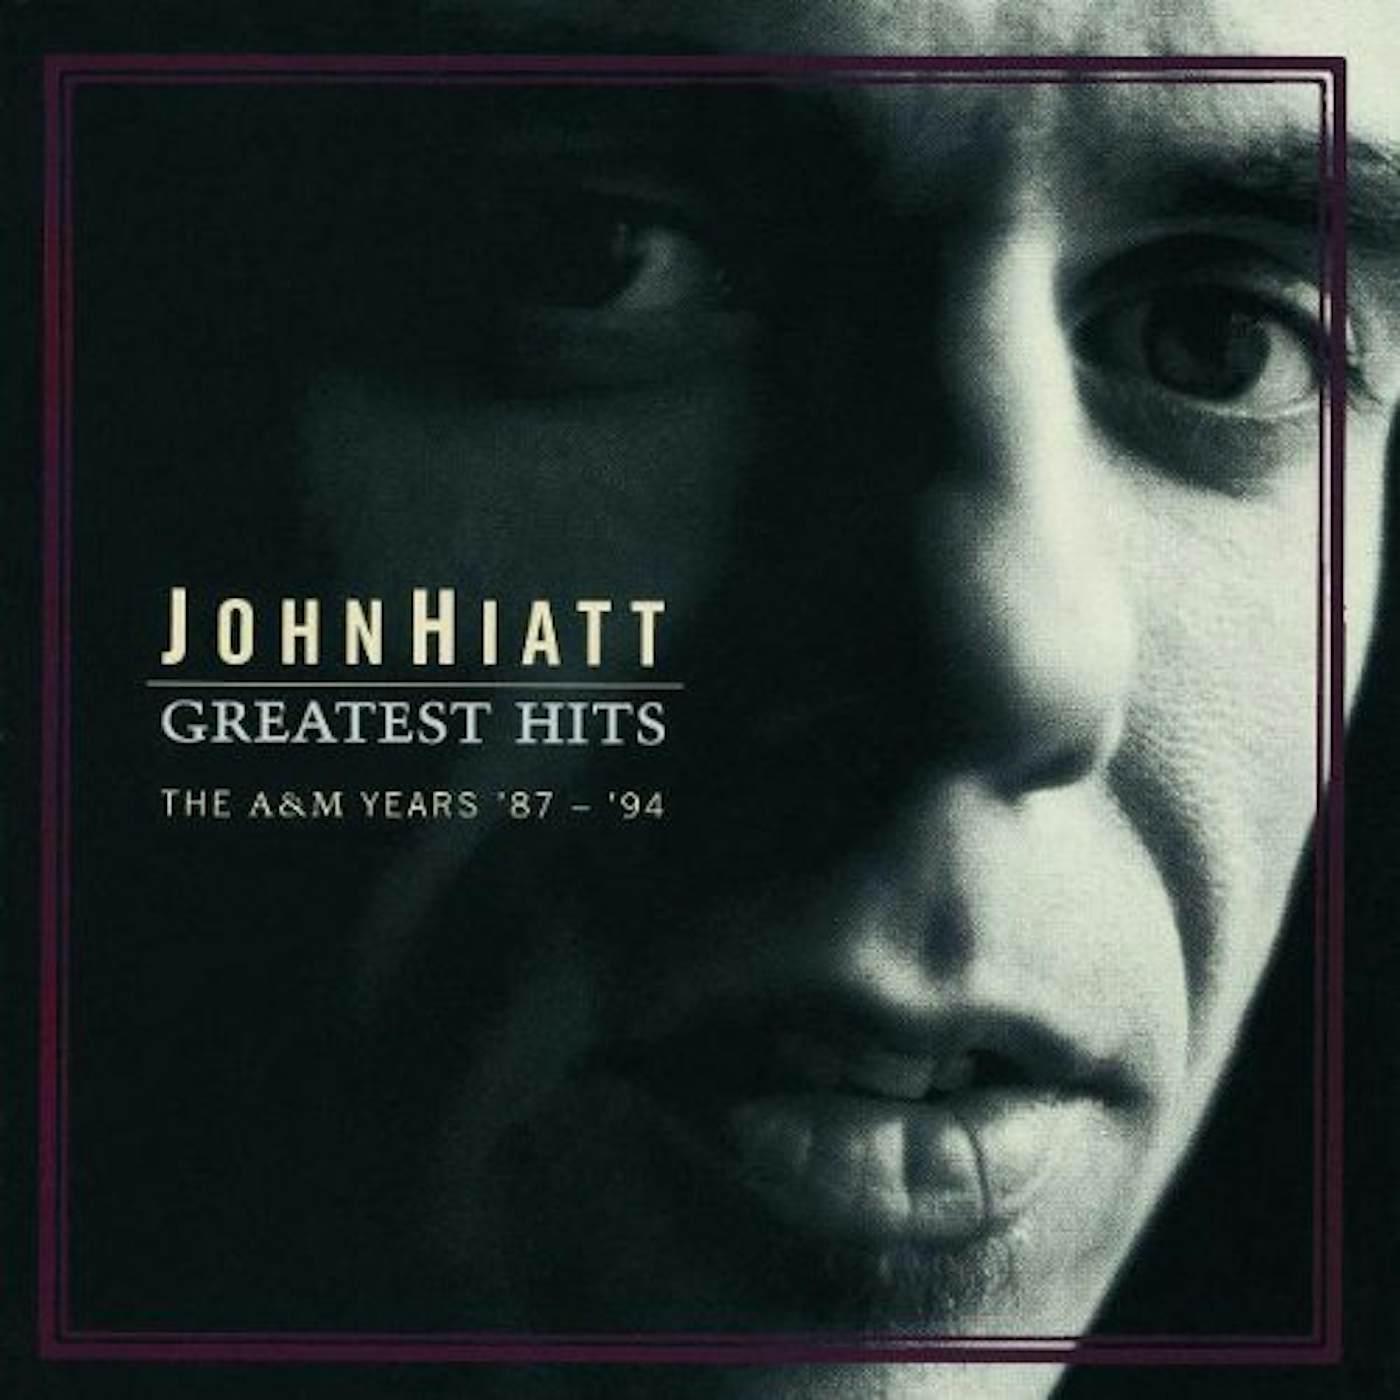 John Hiatt GREATEST HITS: THE A&M YEARS 87-94 CD